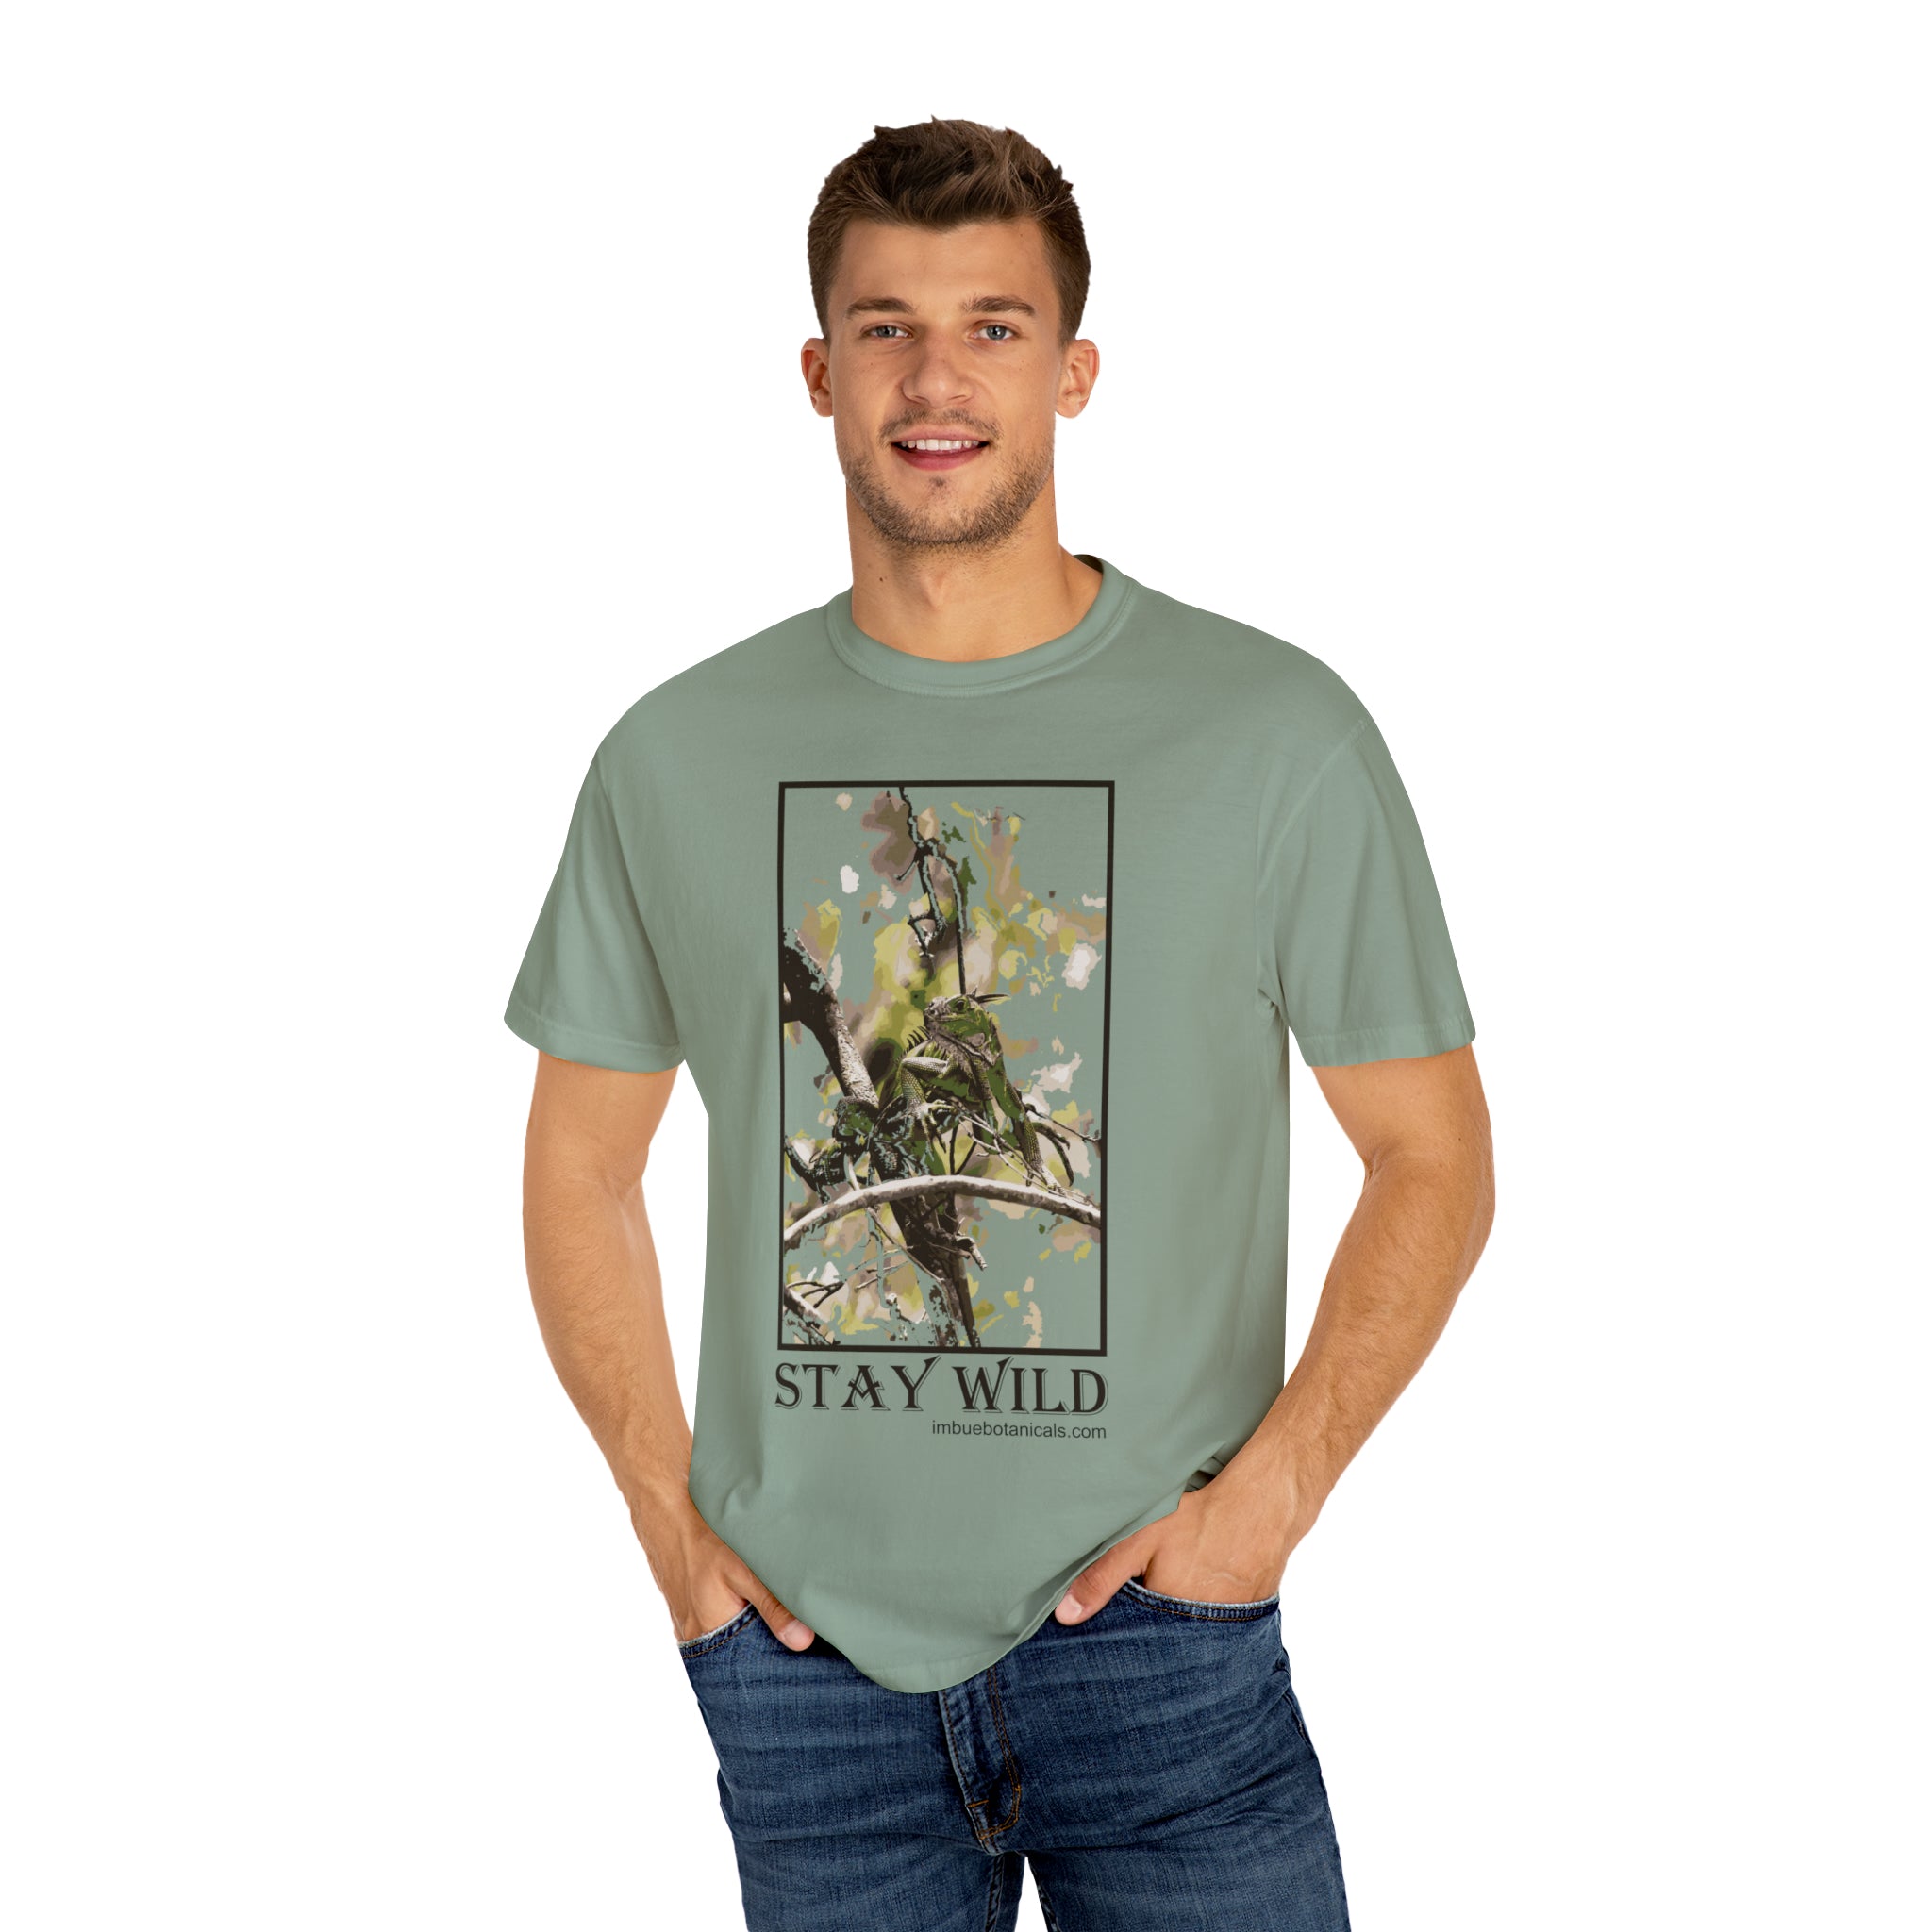 Unisex Garment Dyed T-shirt for Men or Women Comfort fit Stay Wild Green Iguana Design